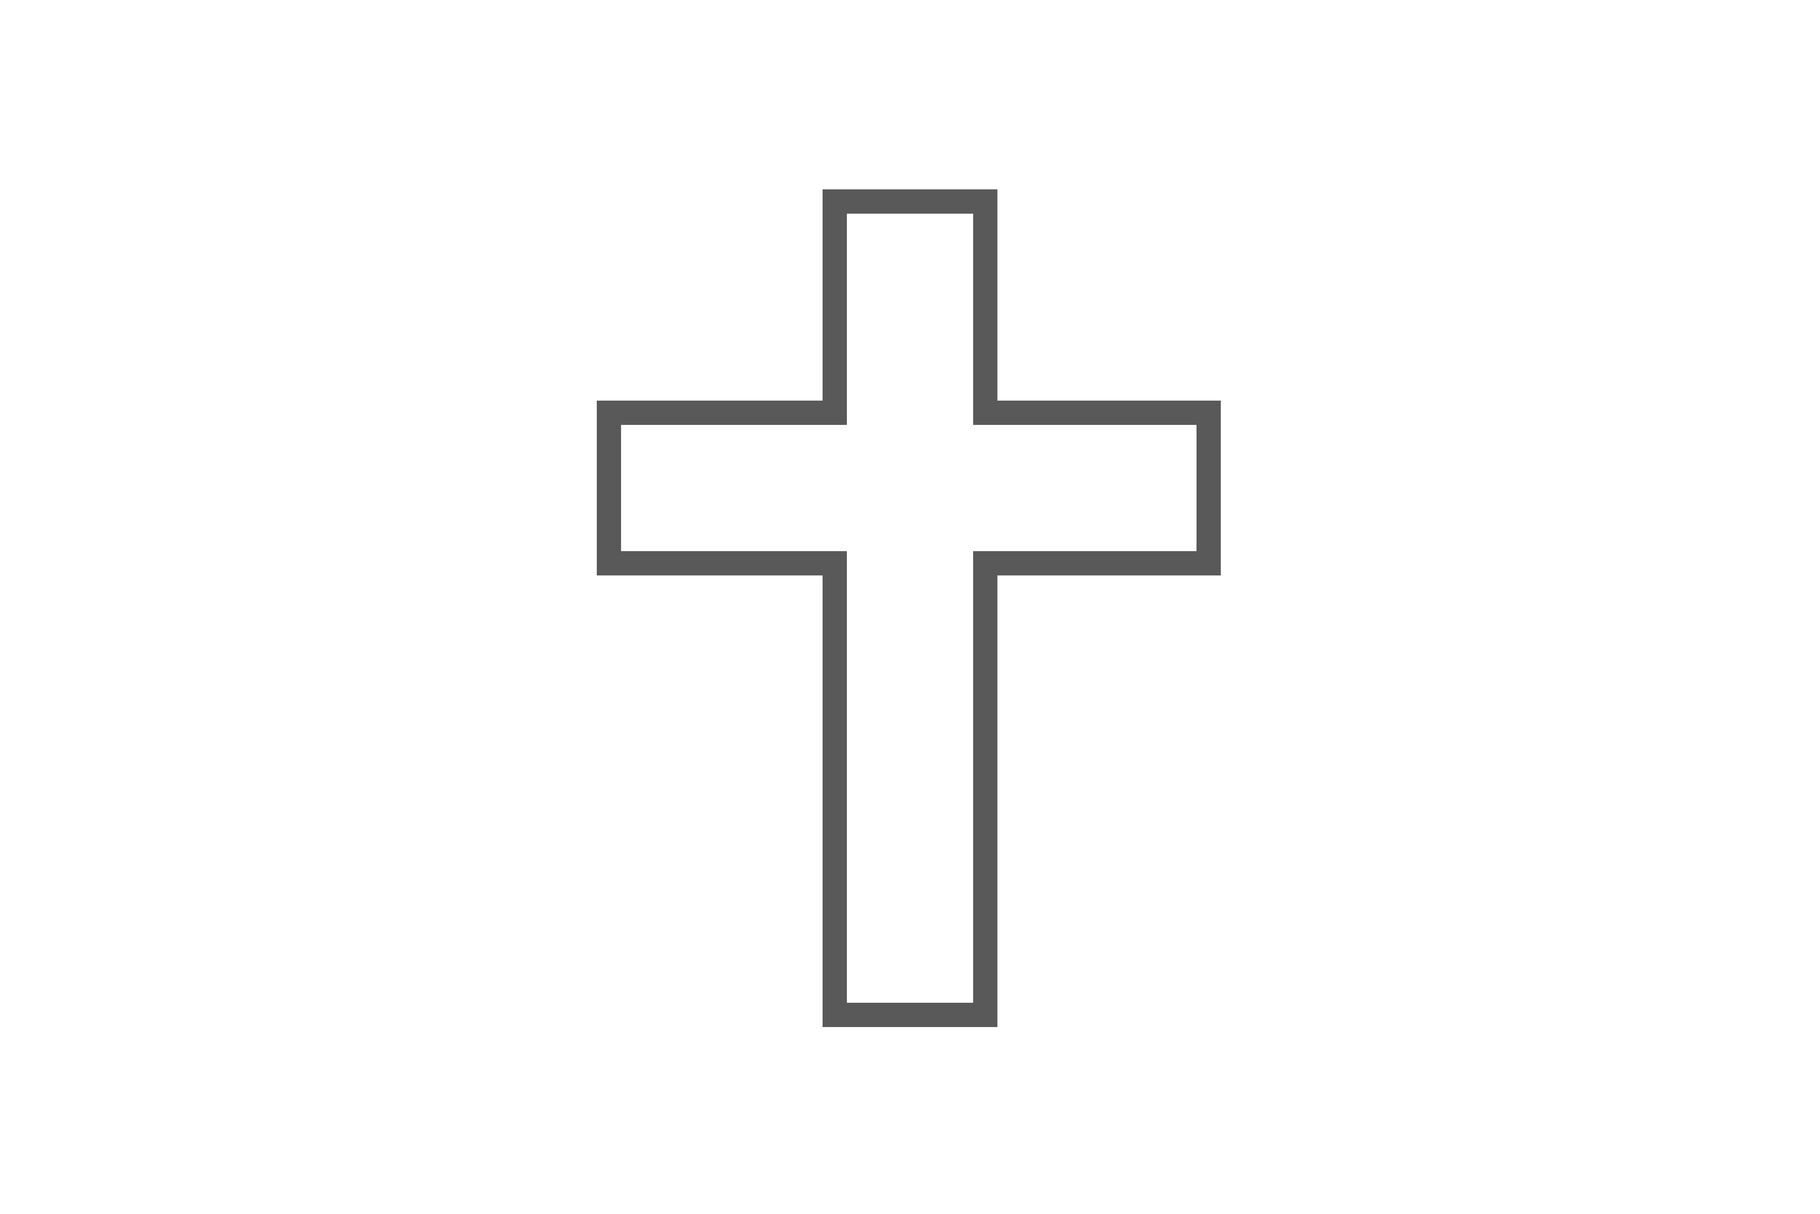 catholic cross symbol